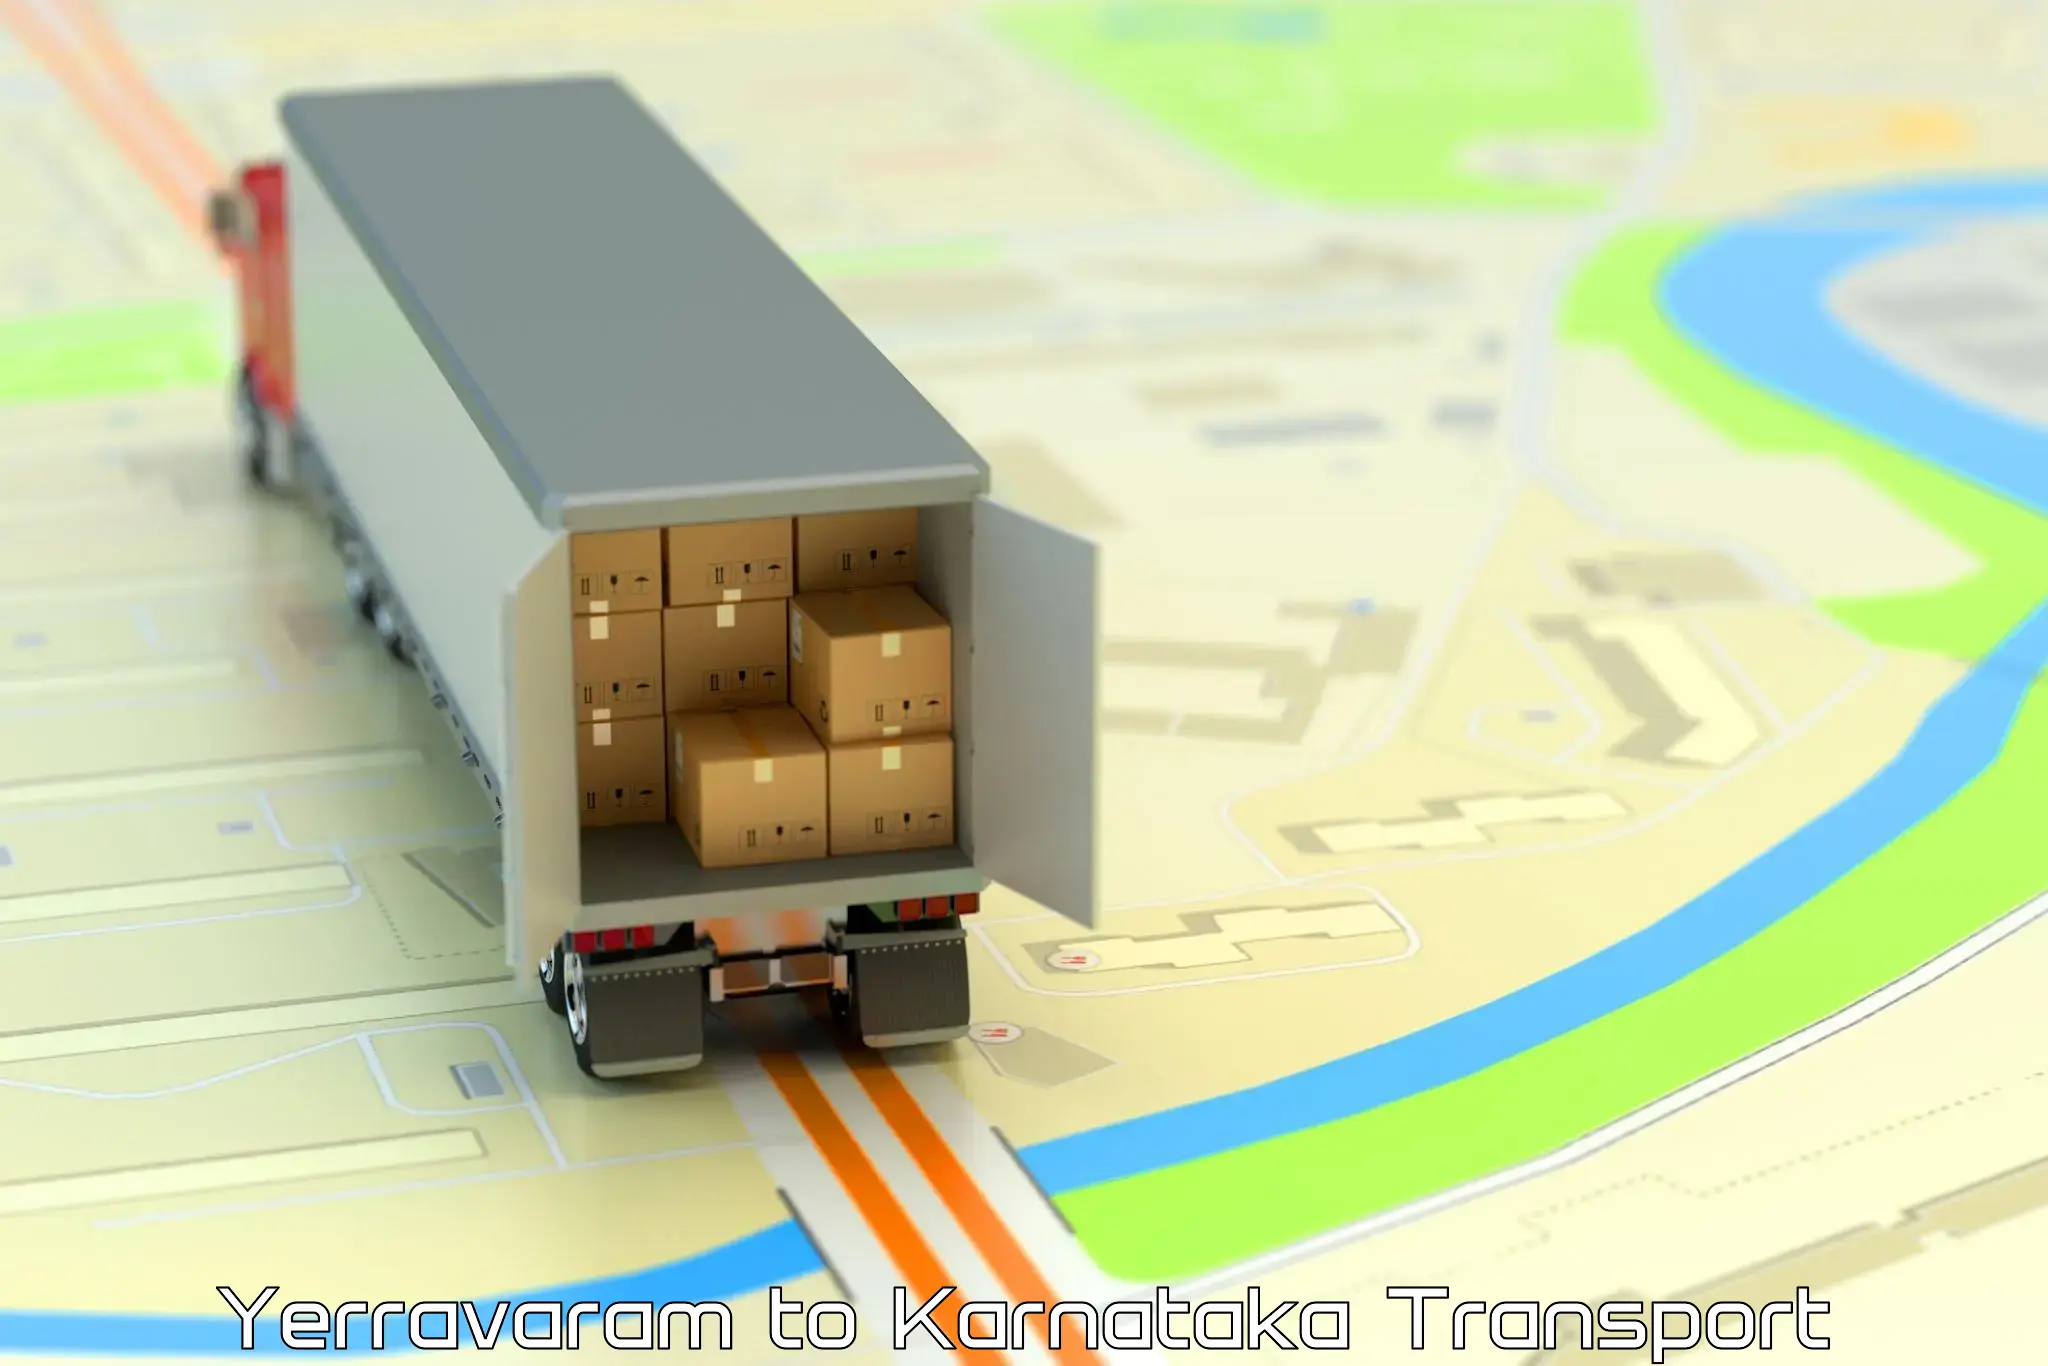 Truck transport companies in India Yerravaram to Eedu